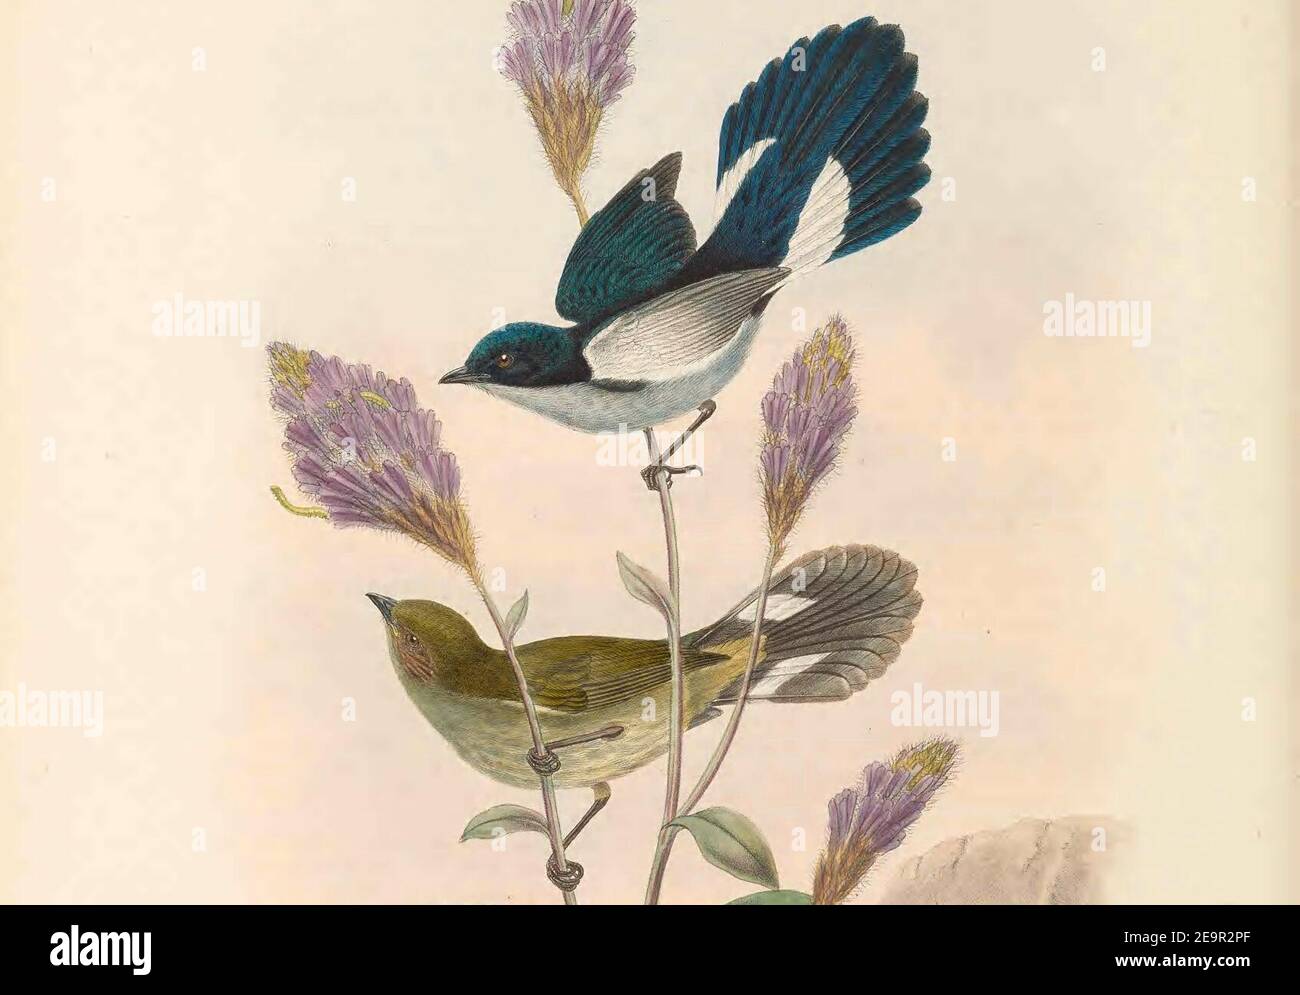 Melanocharis versteri - The Birds of New Guinea (cropped). Stock Photo